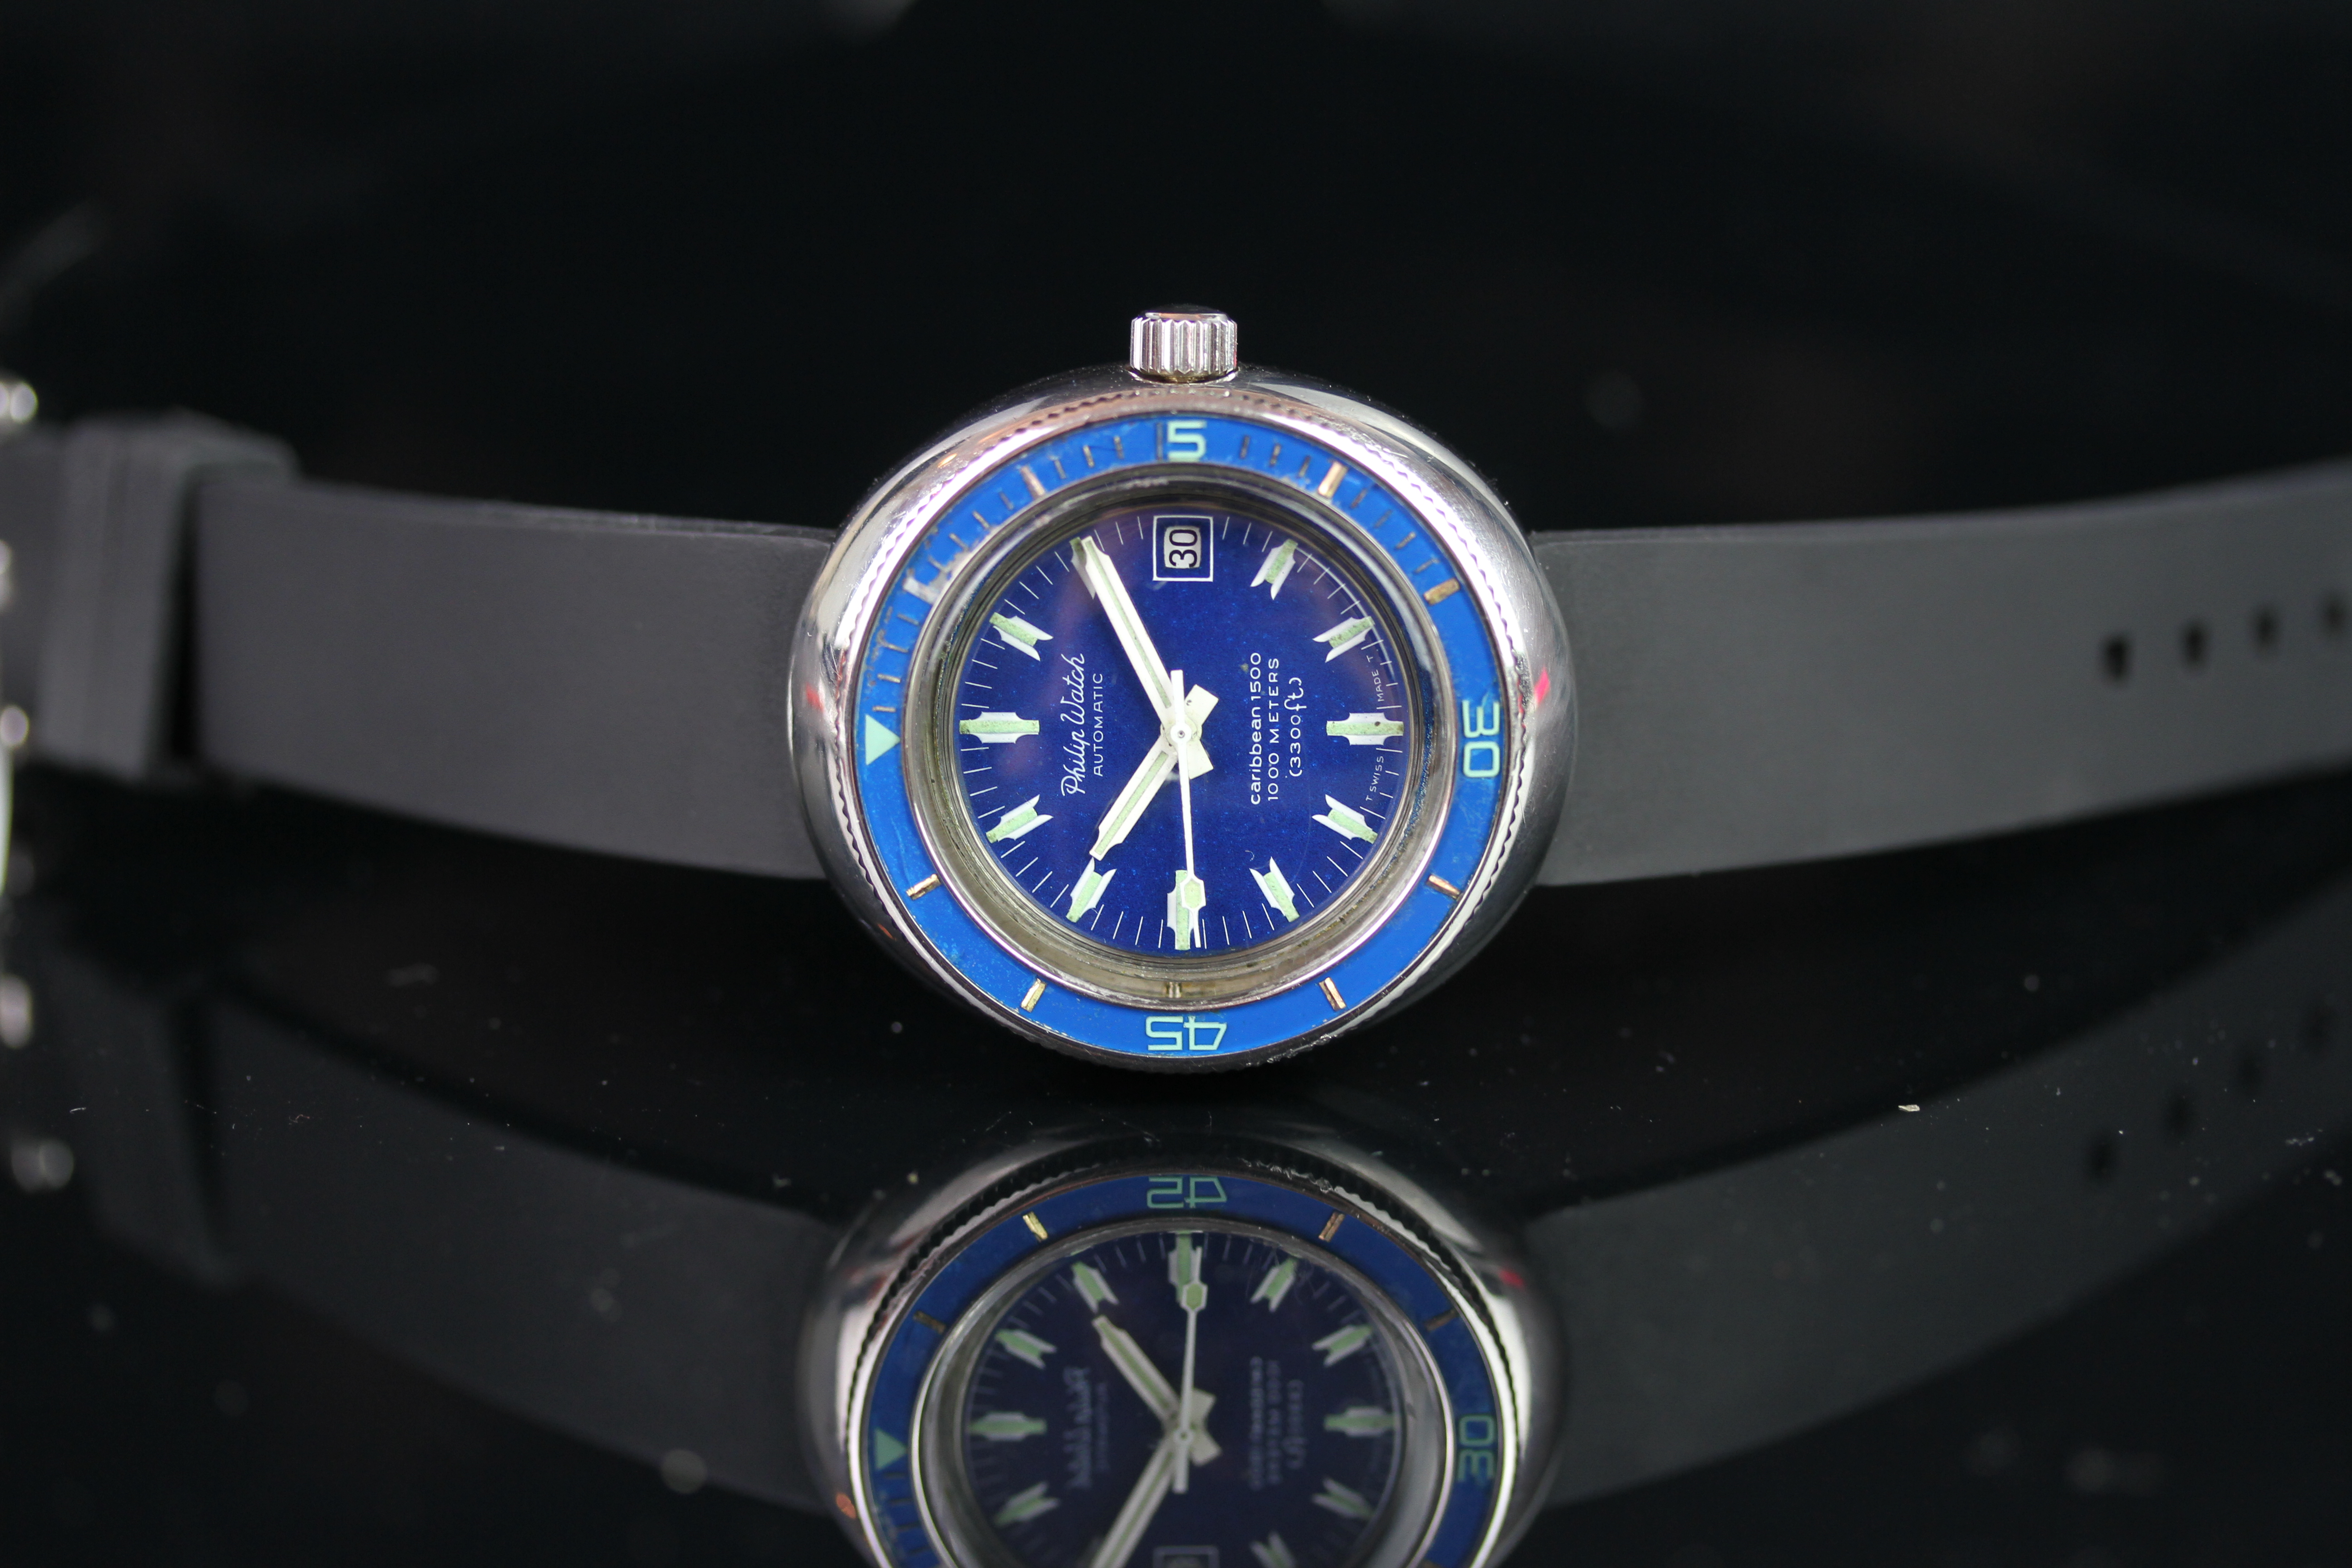 GENTLEMEN'S PHILLIP WATCH CARRIBEAN 1500 VINTAGE DIVERS WATCH, circular blue dial with luminous - Image 4 of 6